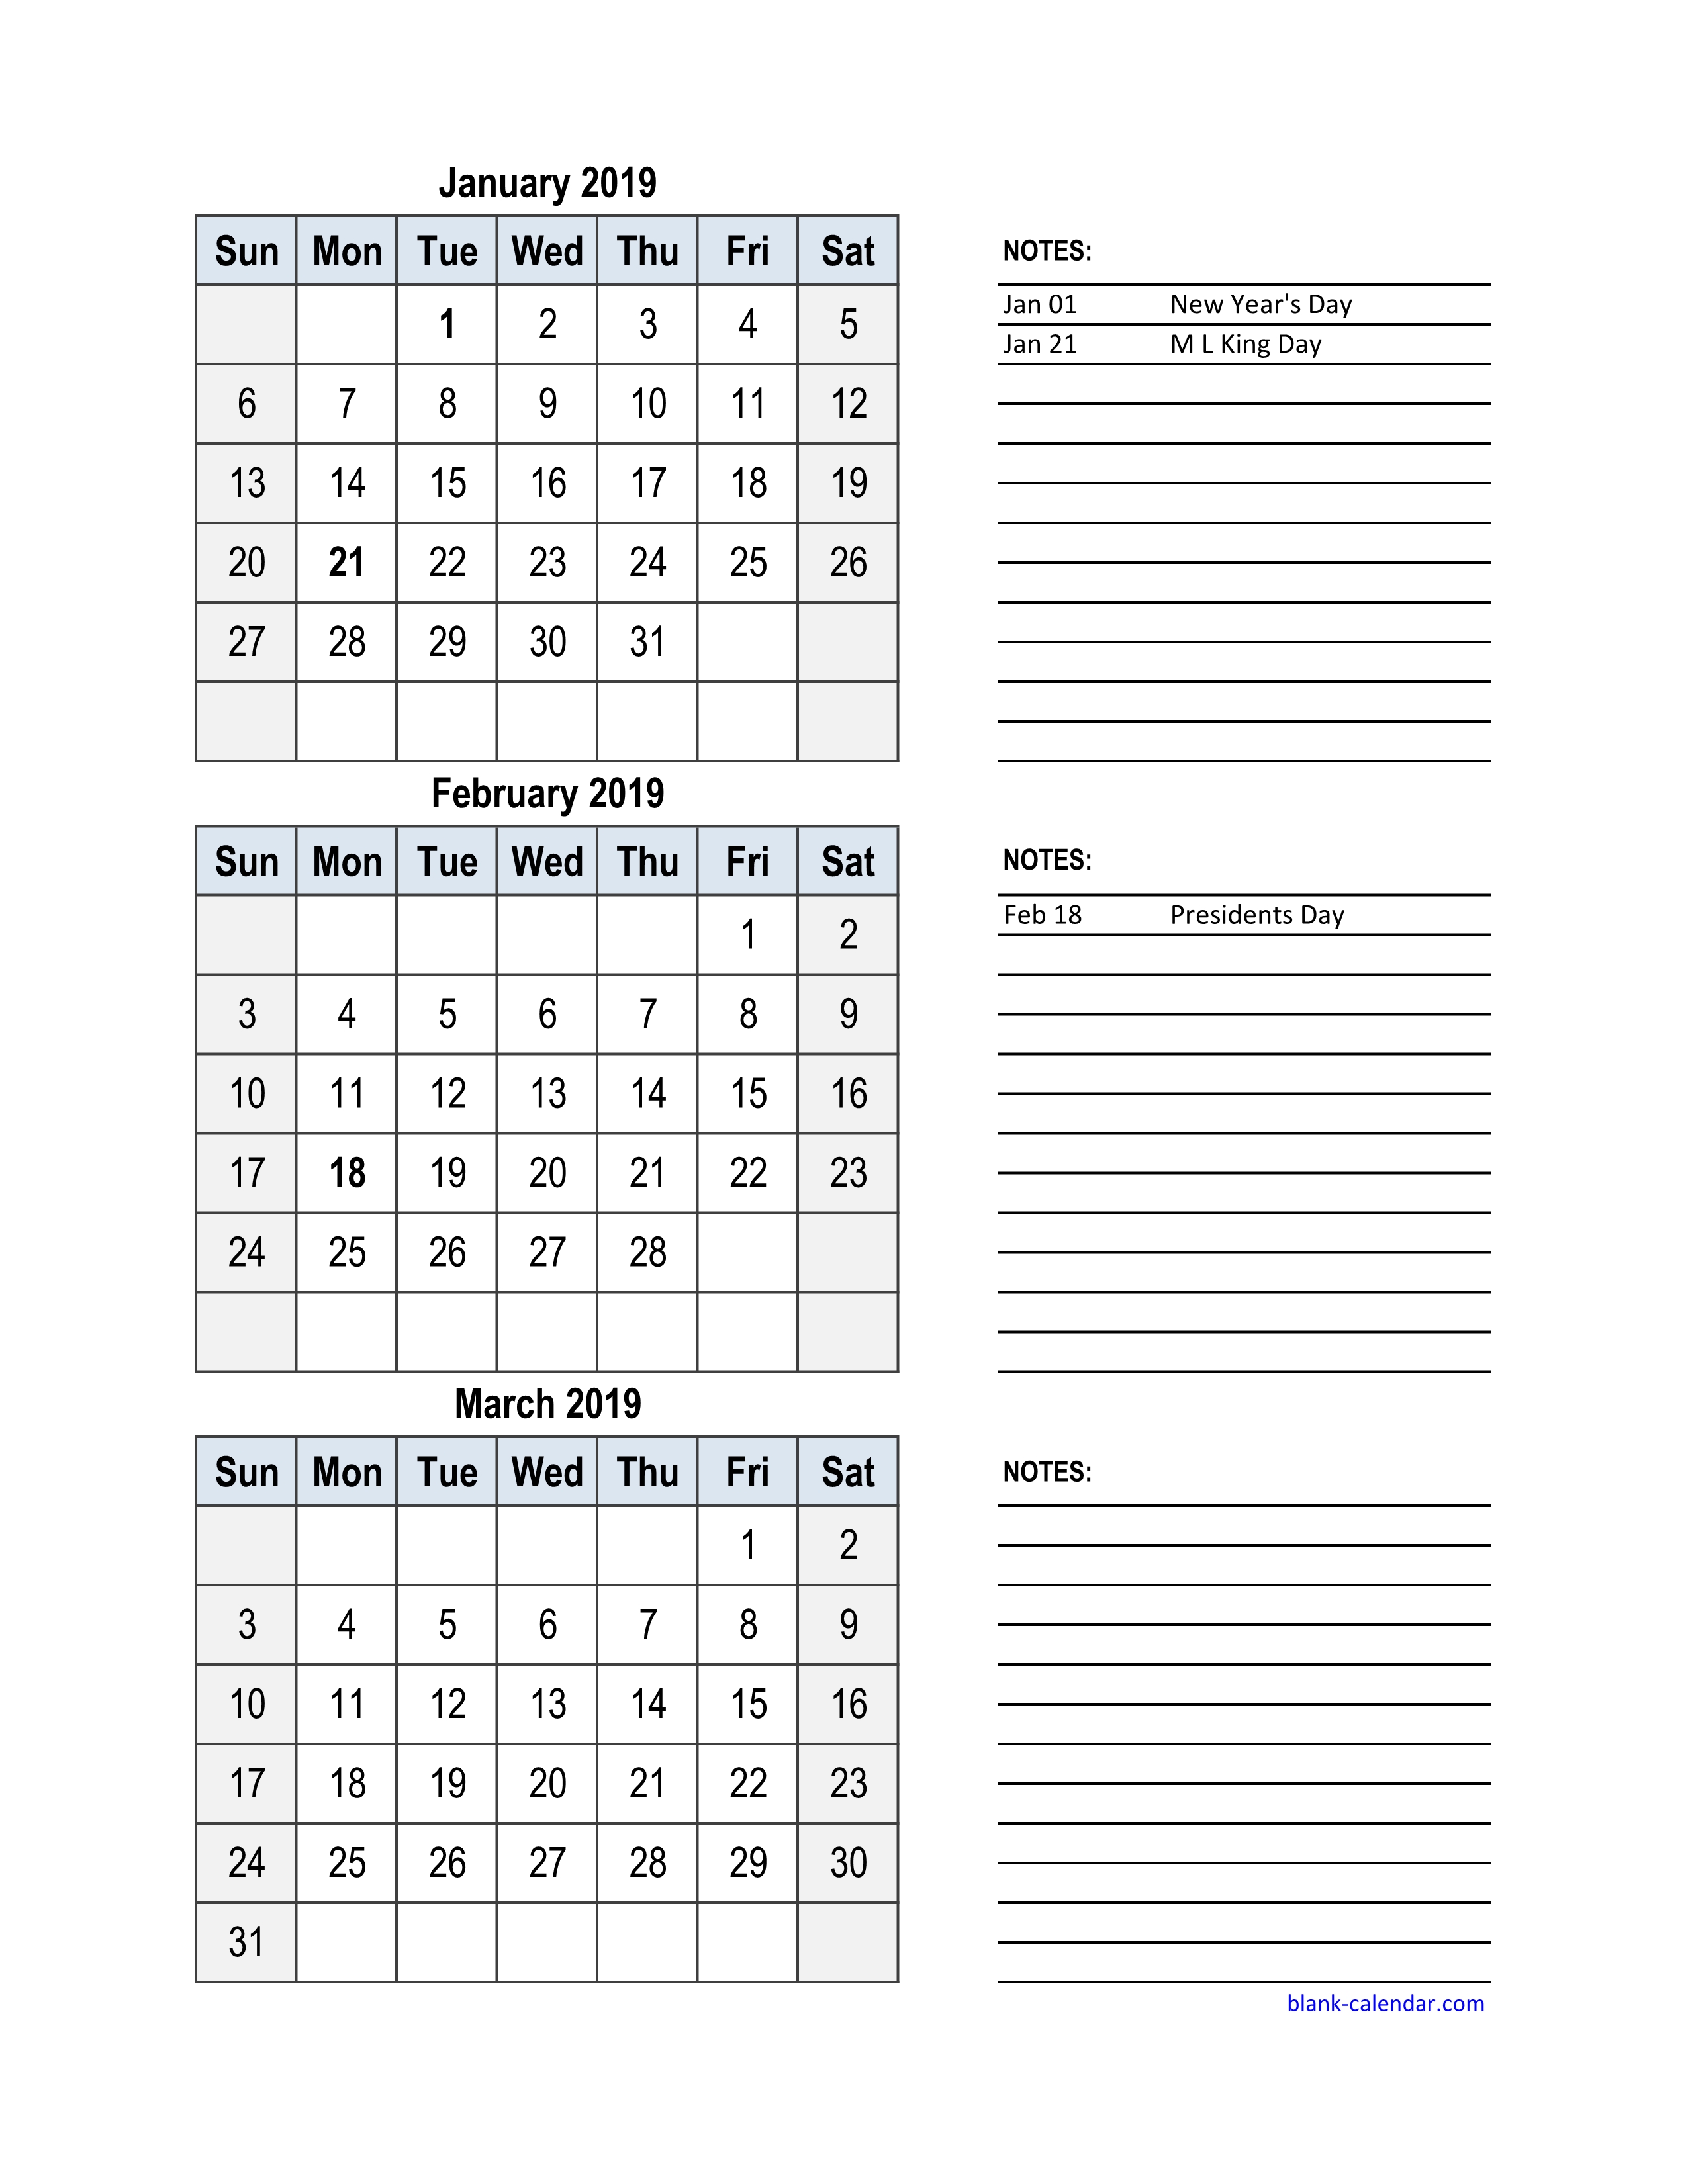 free-download-2019-excel-calendar-3-months-in-one-excel-spreadsheet-vertical